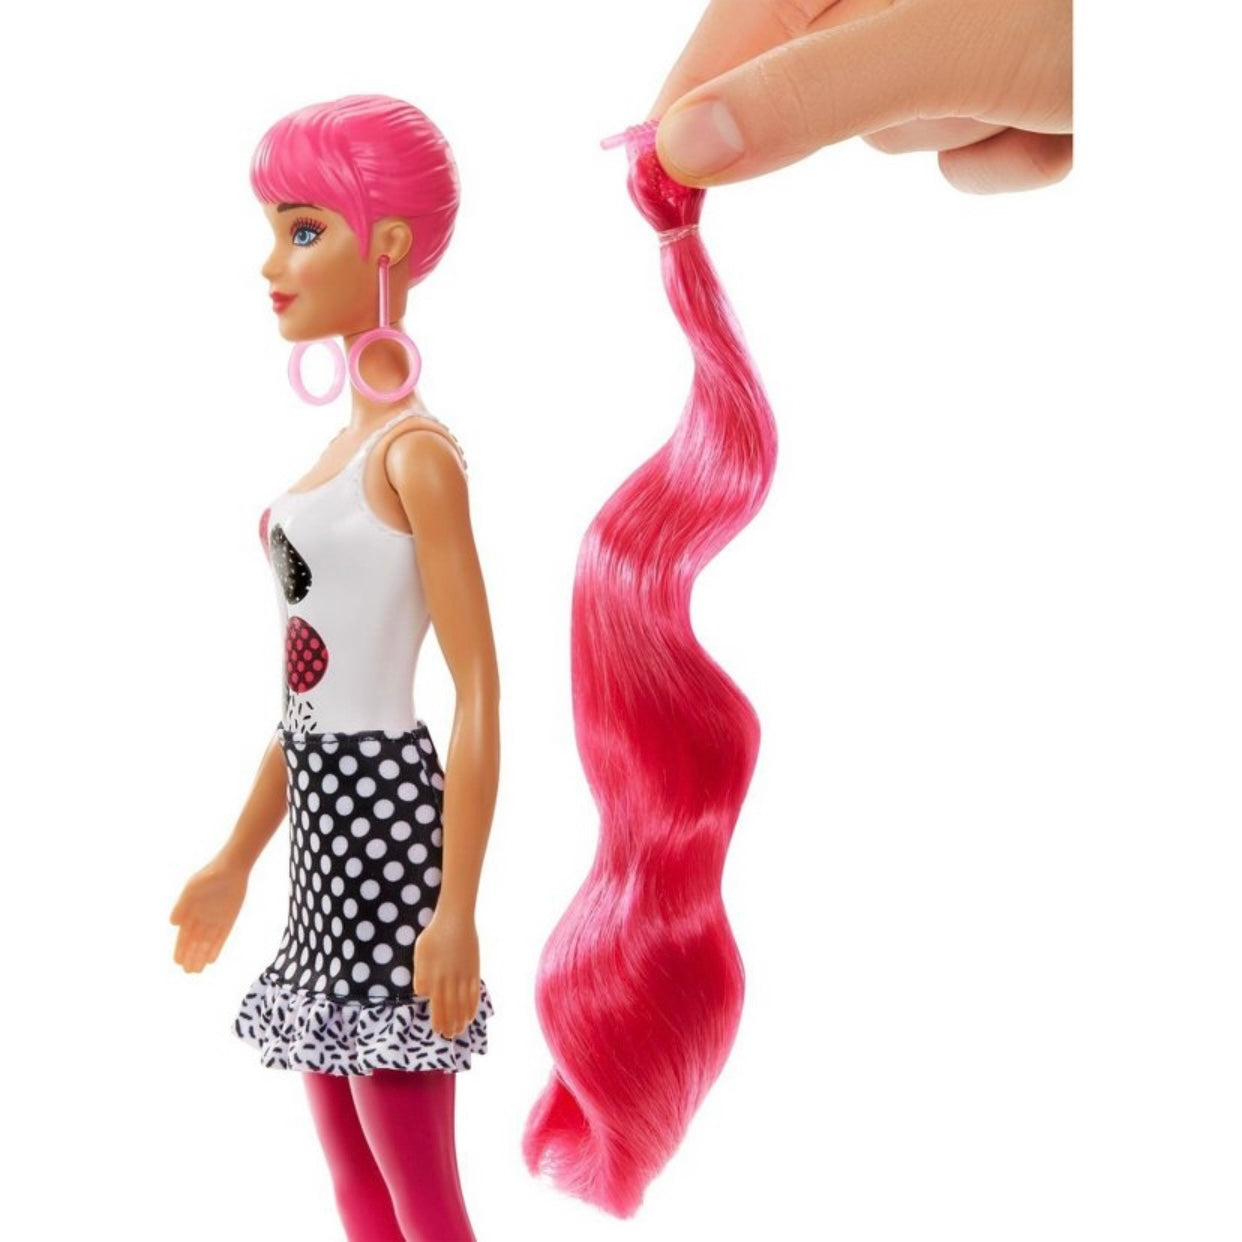 Barbie Color Reveal Doll with 7 Surprises - COLOR BLOCK SERIES!